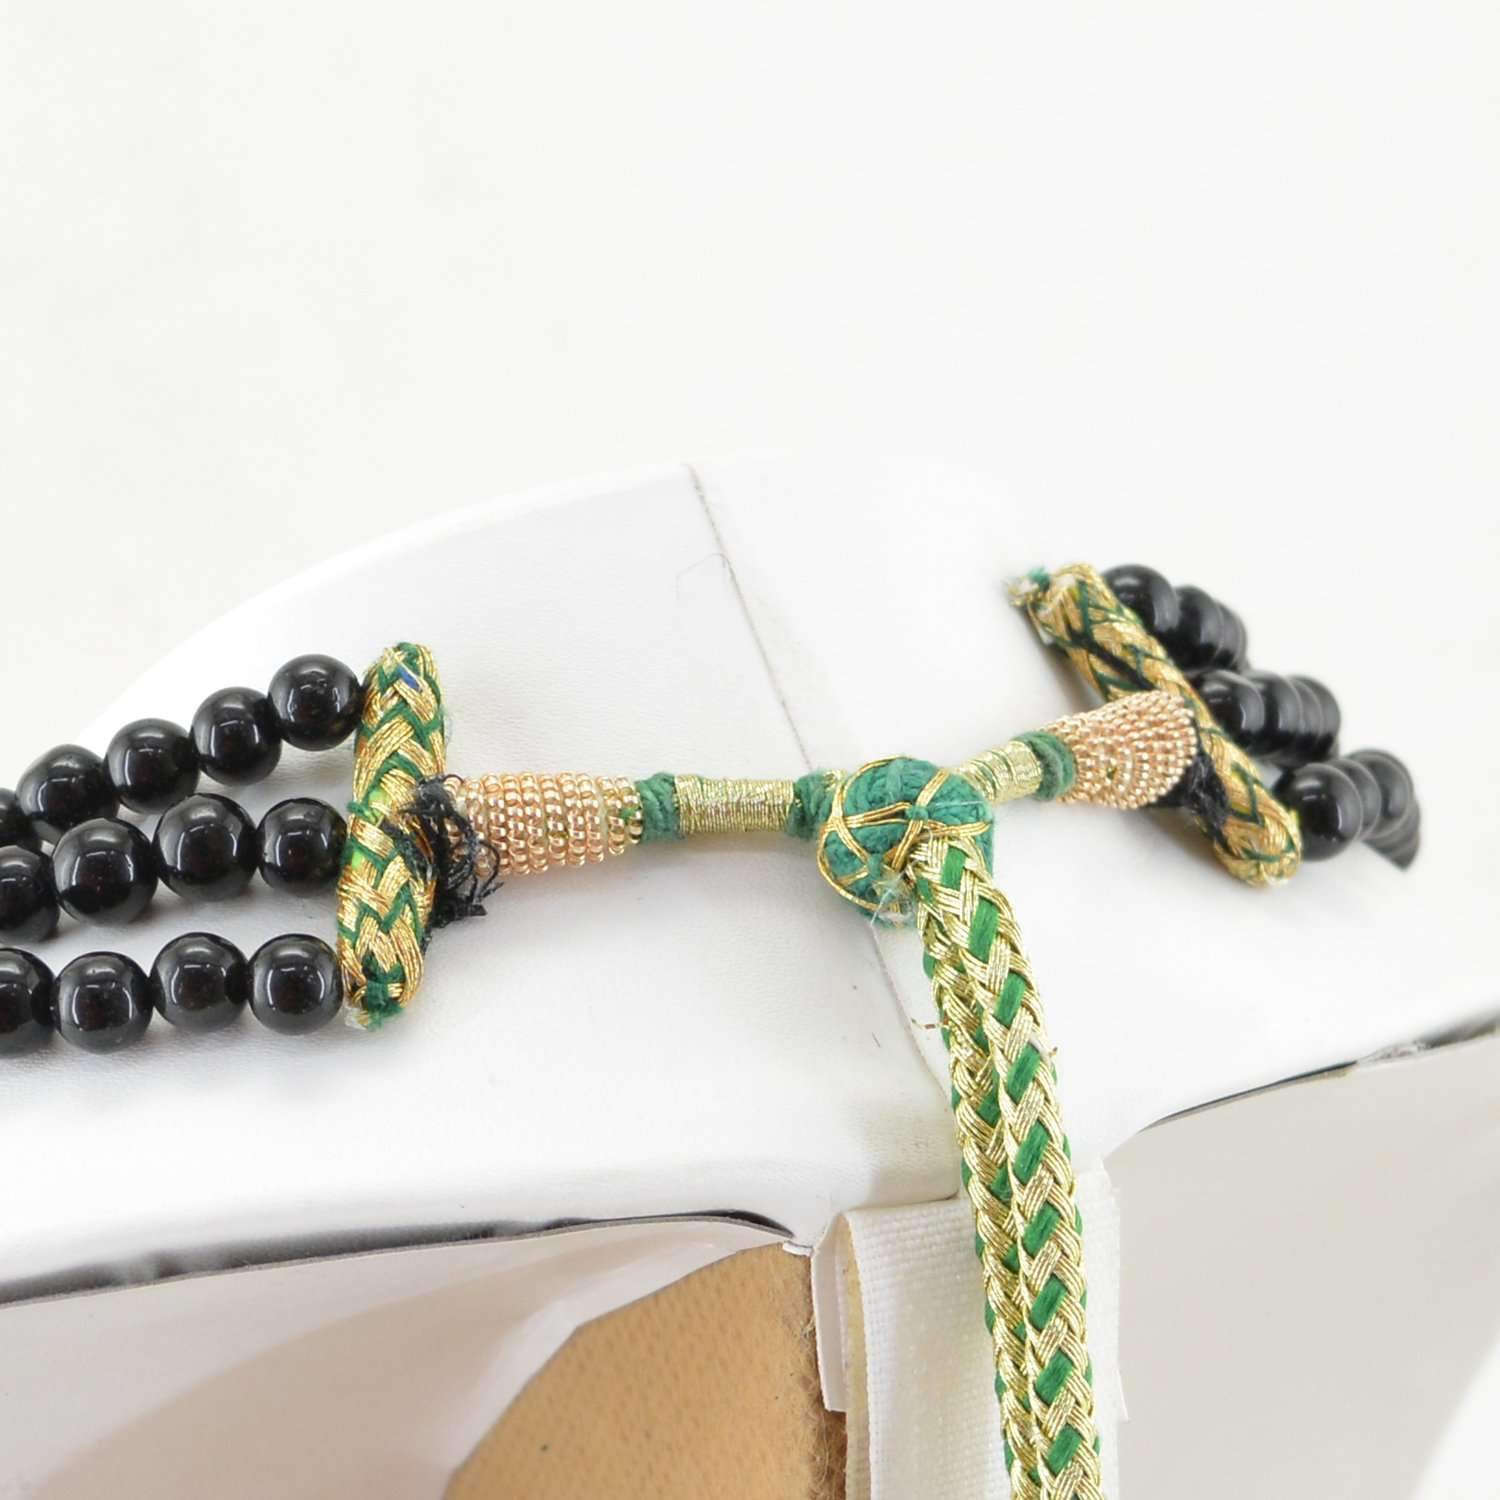 gemsmore:3 Strand Black Spinel Necklace Natural Round Shape Beads